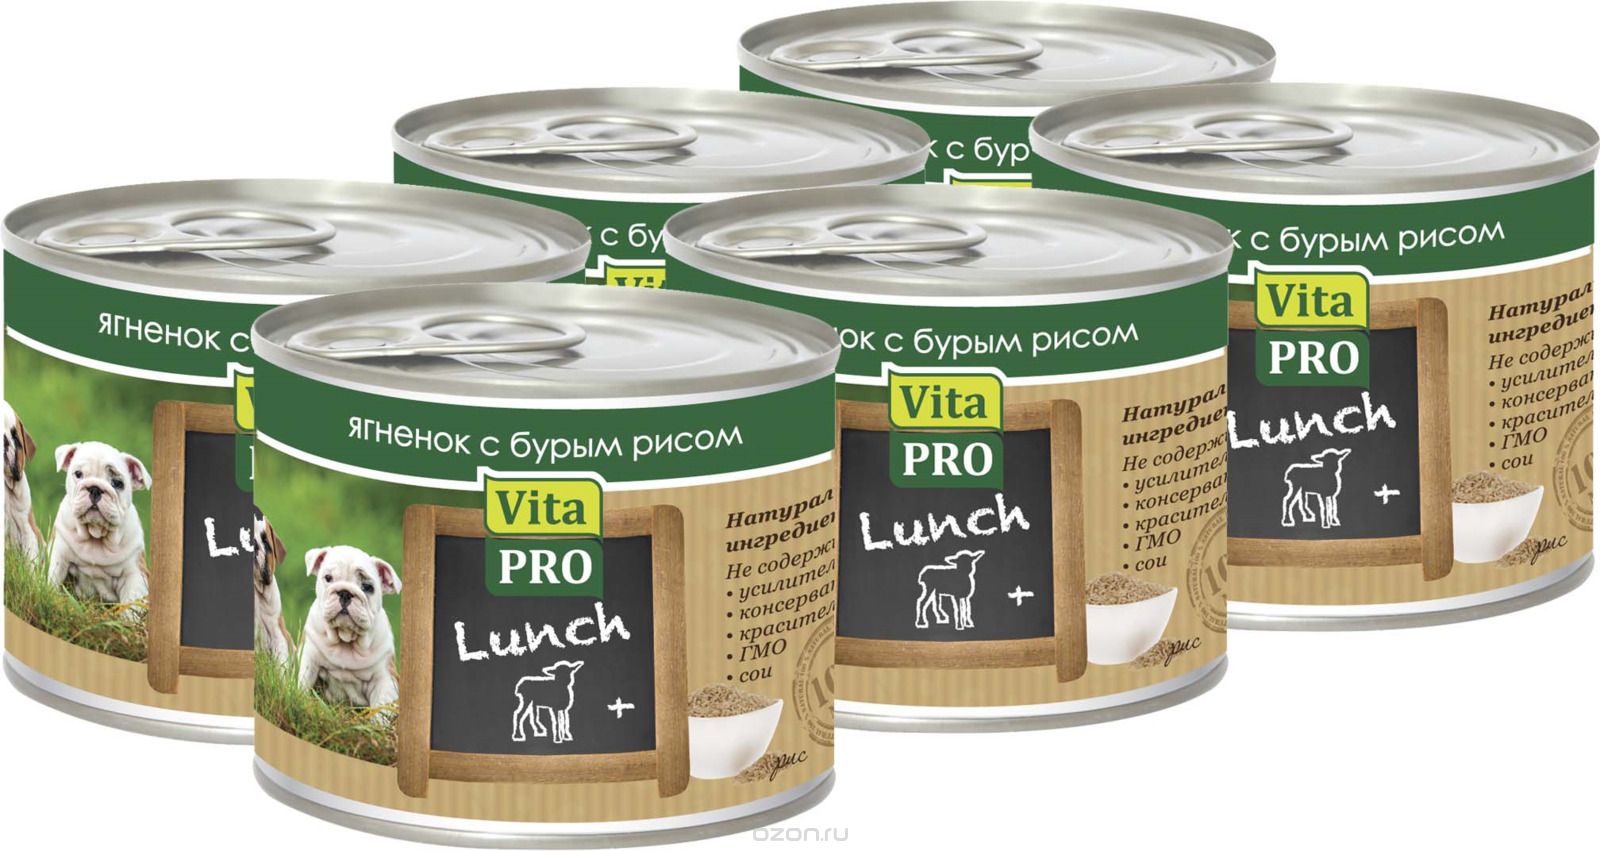   Vita Pro Lunch,  ,    , 6   200 